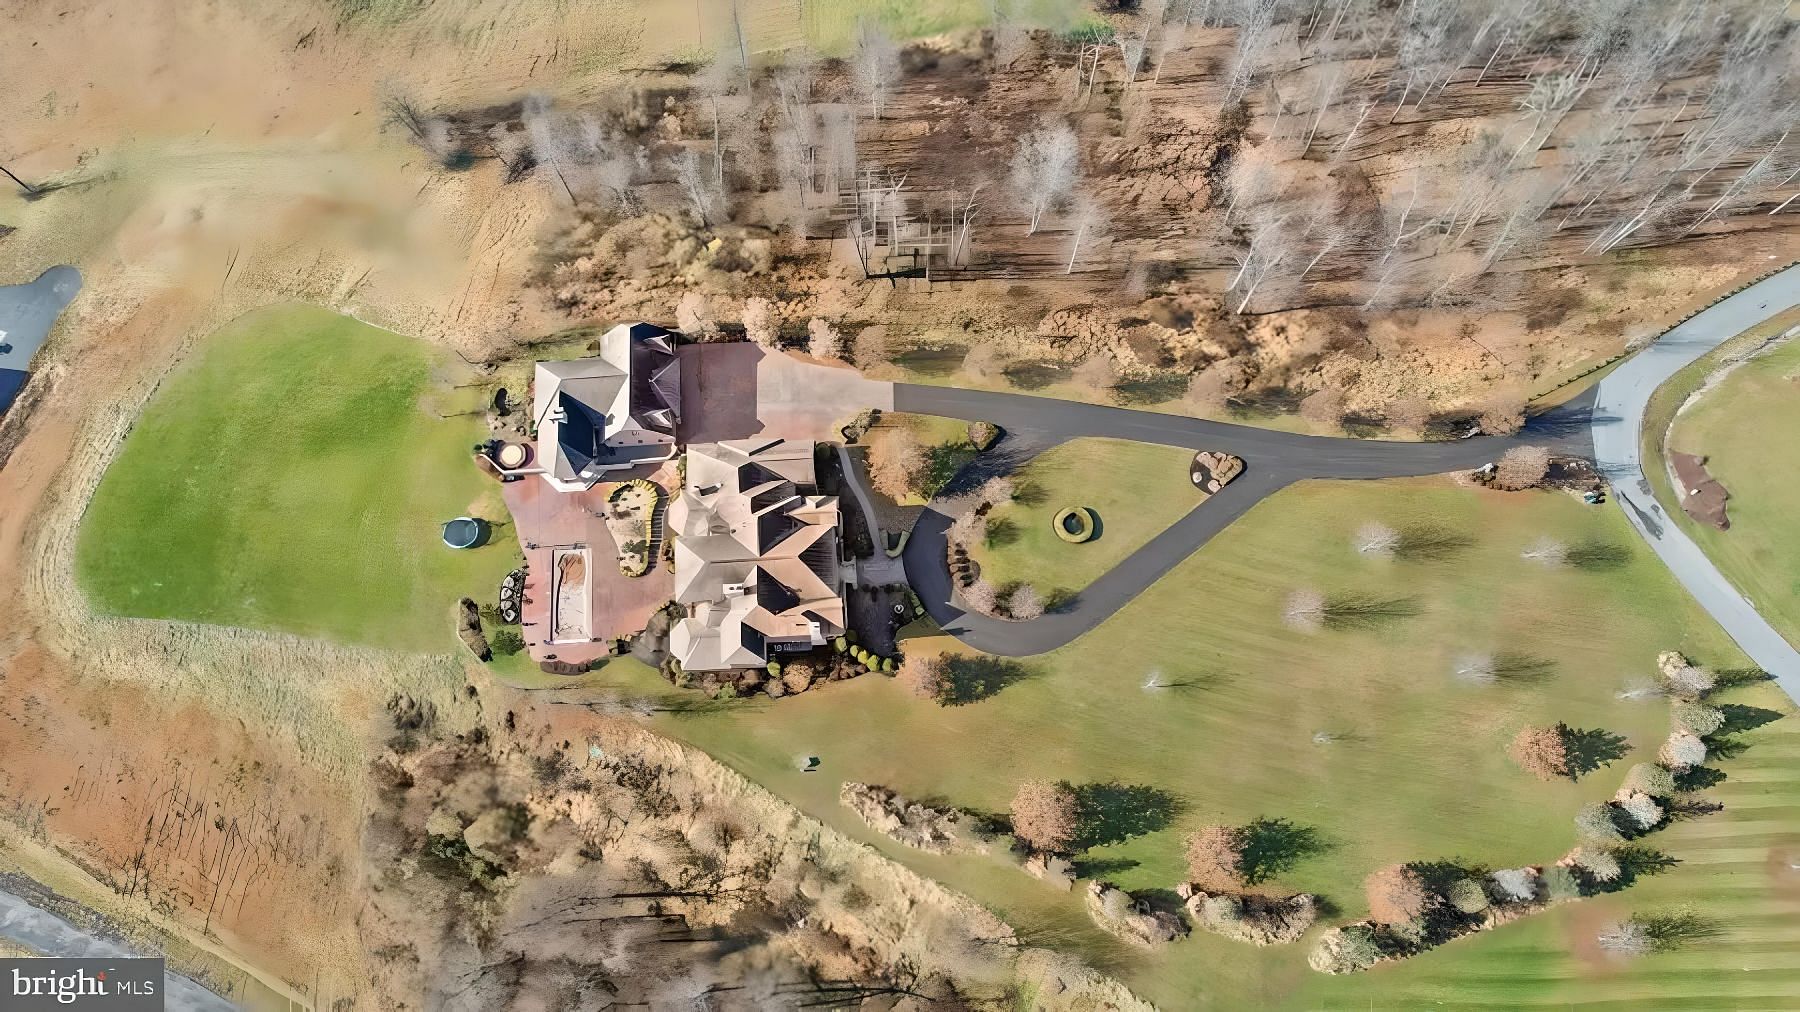 Galusky selling $3,000,000 Bridgeport mansion (image credit: Railey Realty)